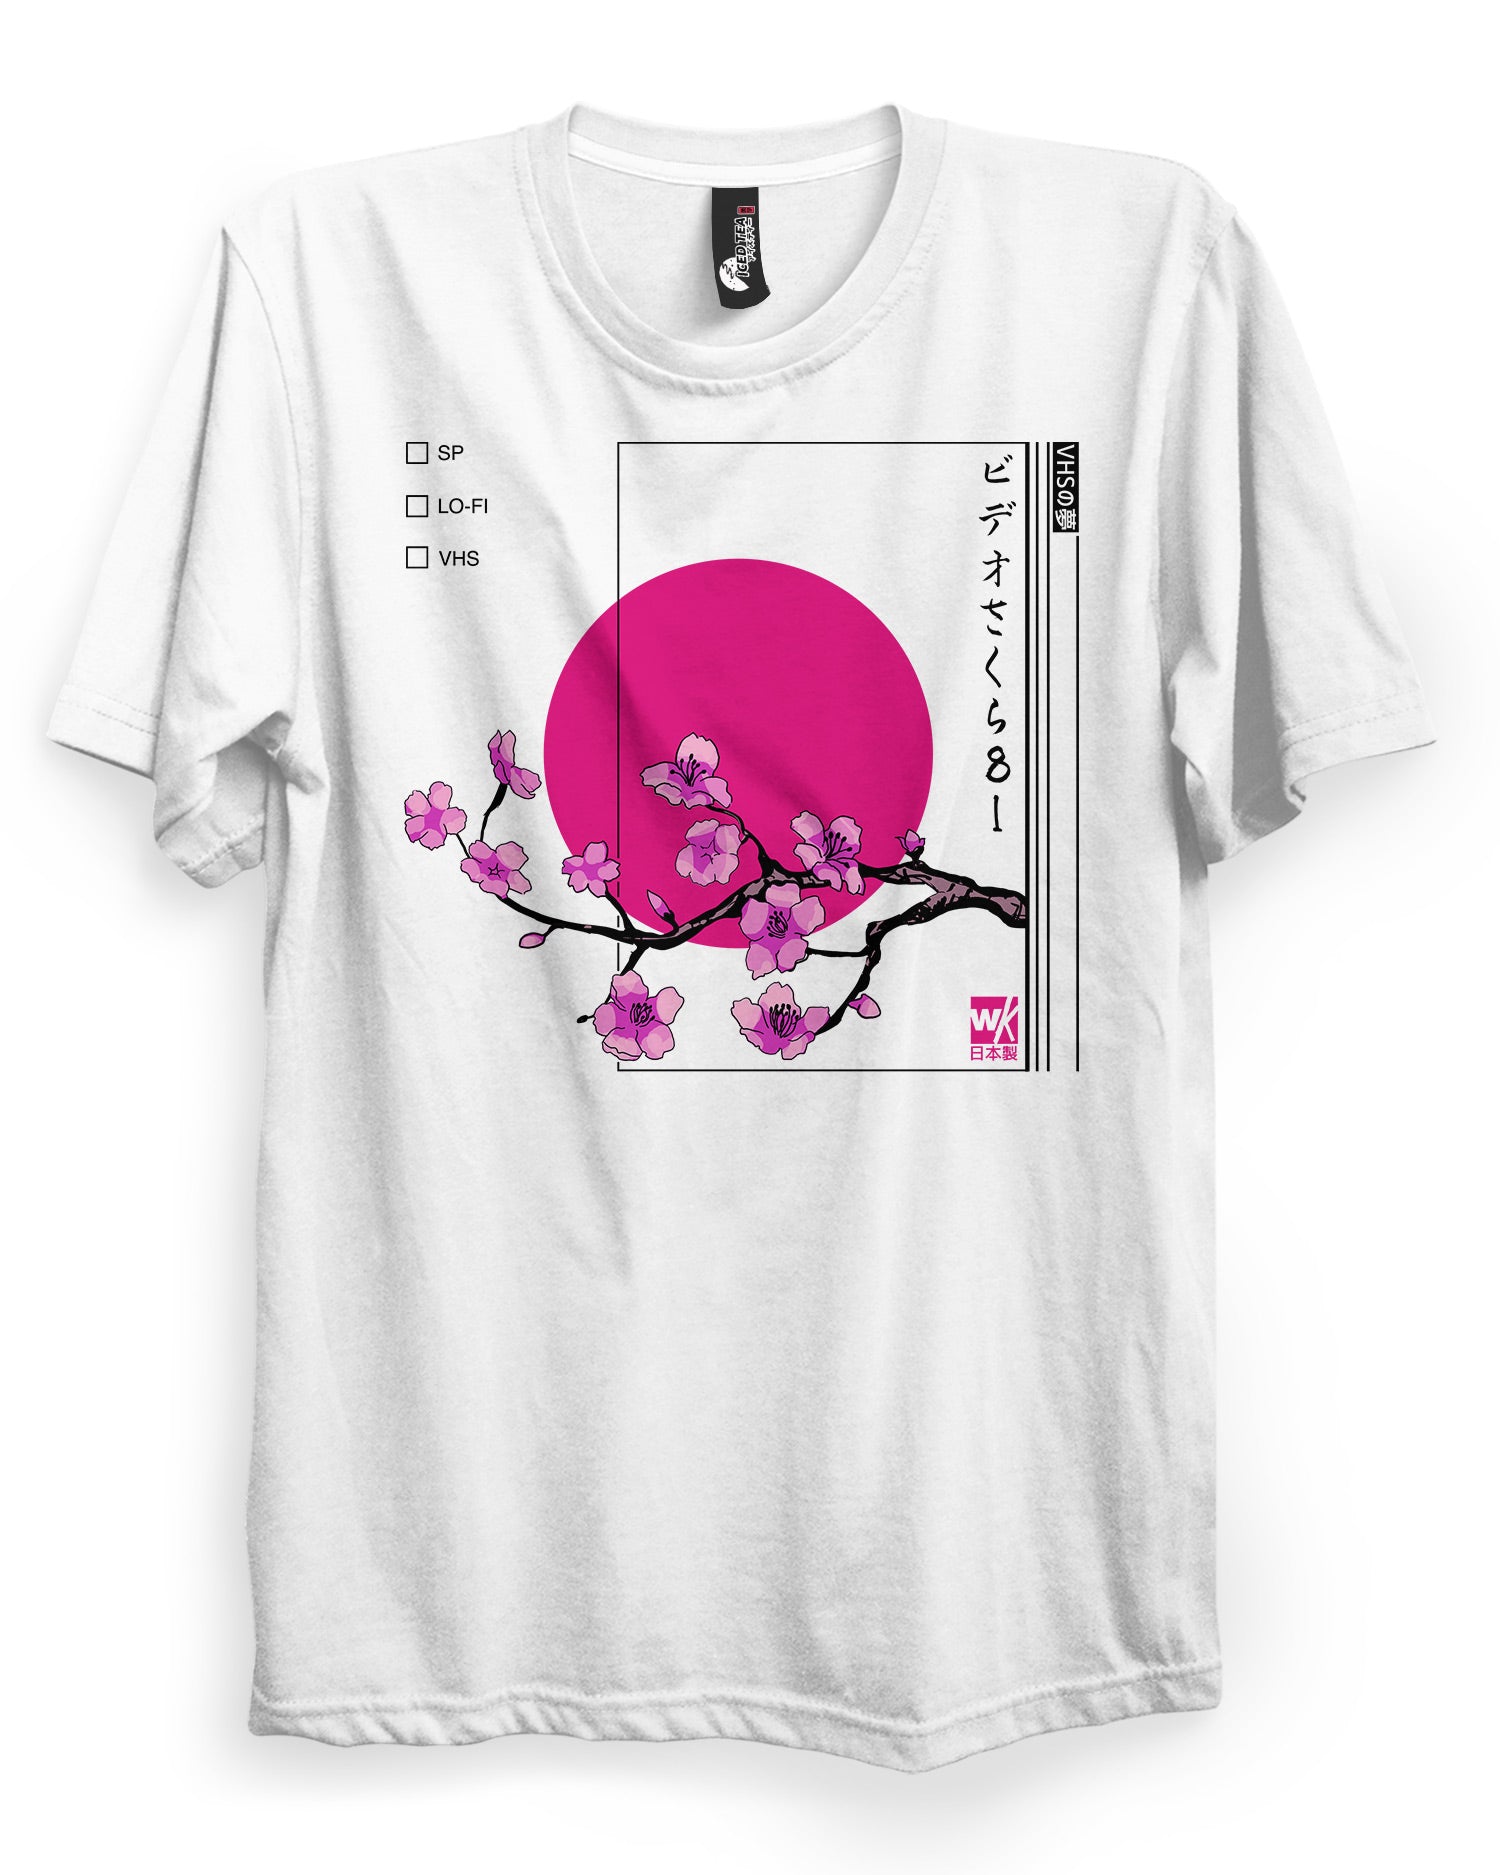 Sunset LOFI Sakura - Vaporwave T-Shirt - Dark Aesthetics and Anime Clothing Streetwear